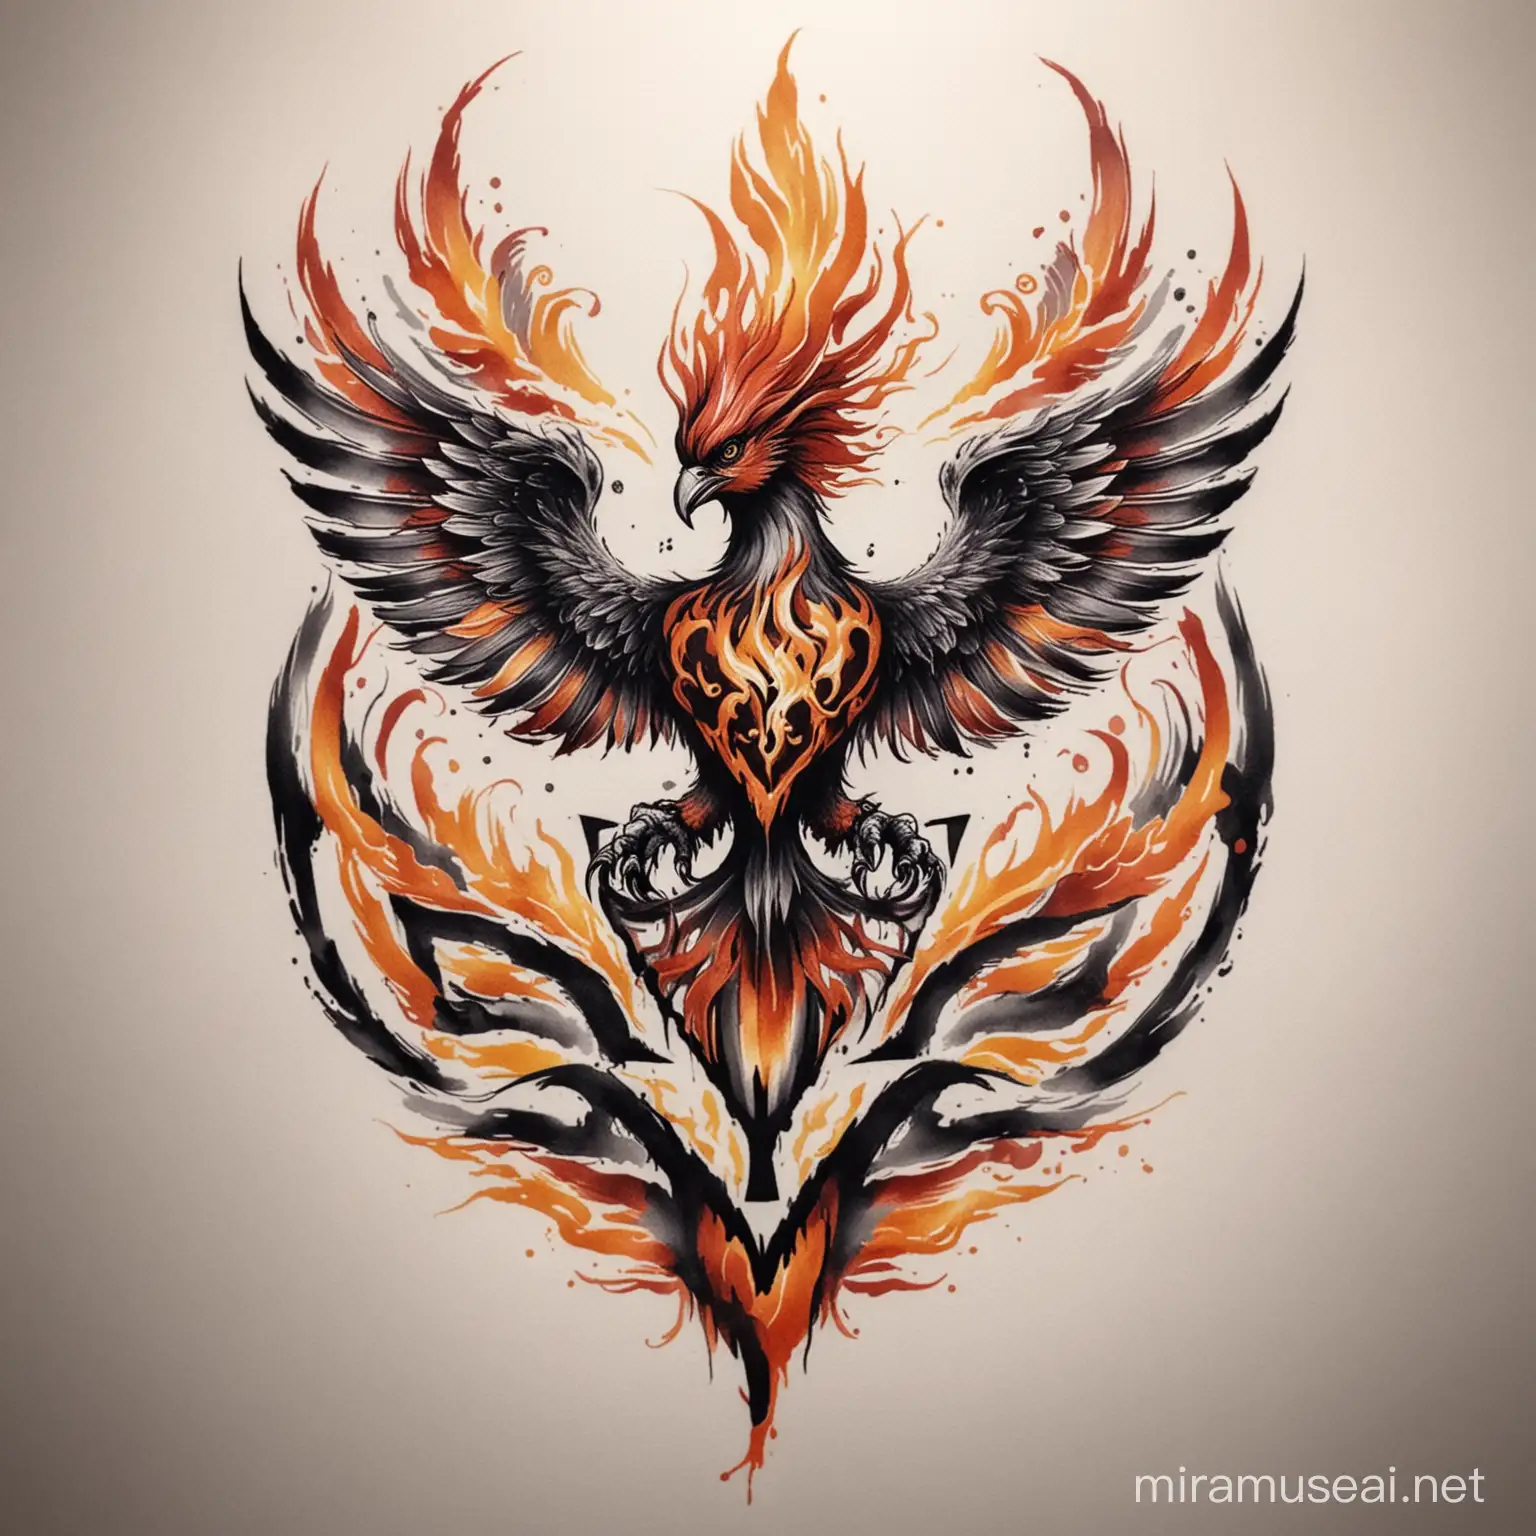 Fiery Phoenix Tattoo with Elegant V Design